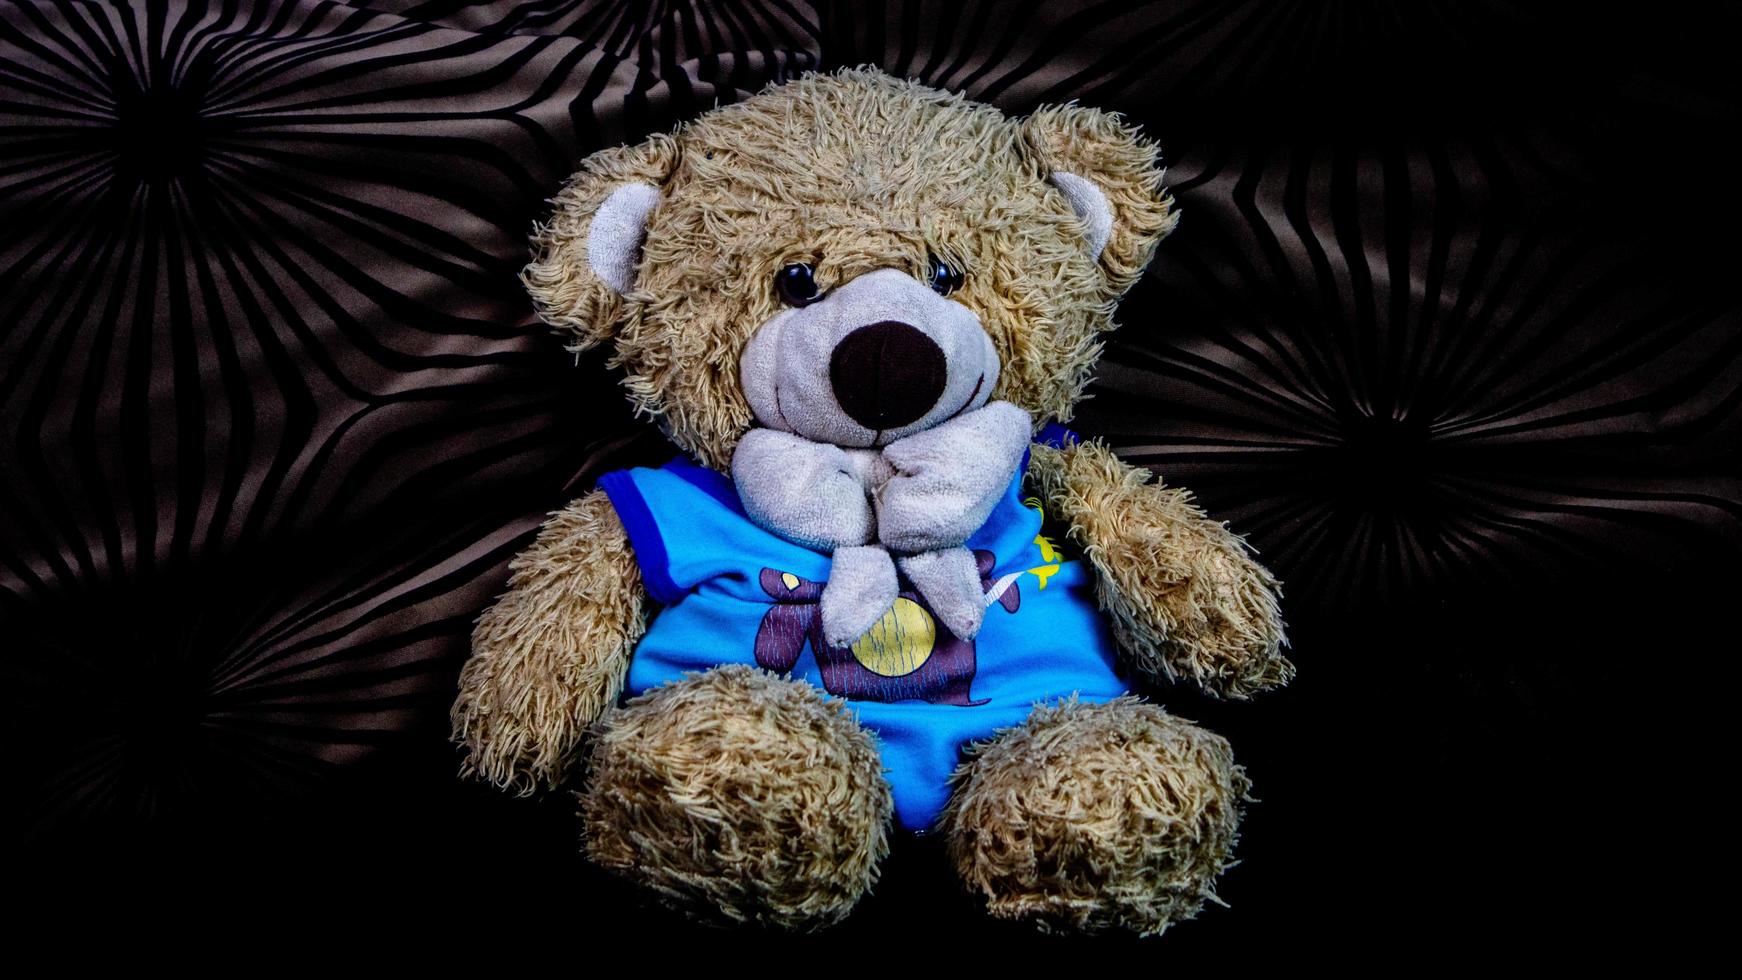 teddy bear in a blue t-shirt on a black sofa photo